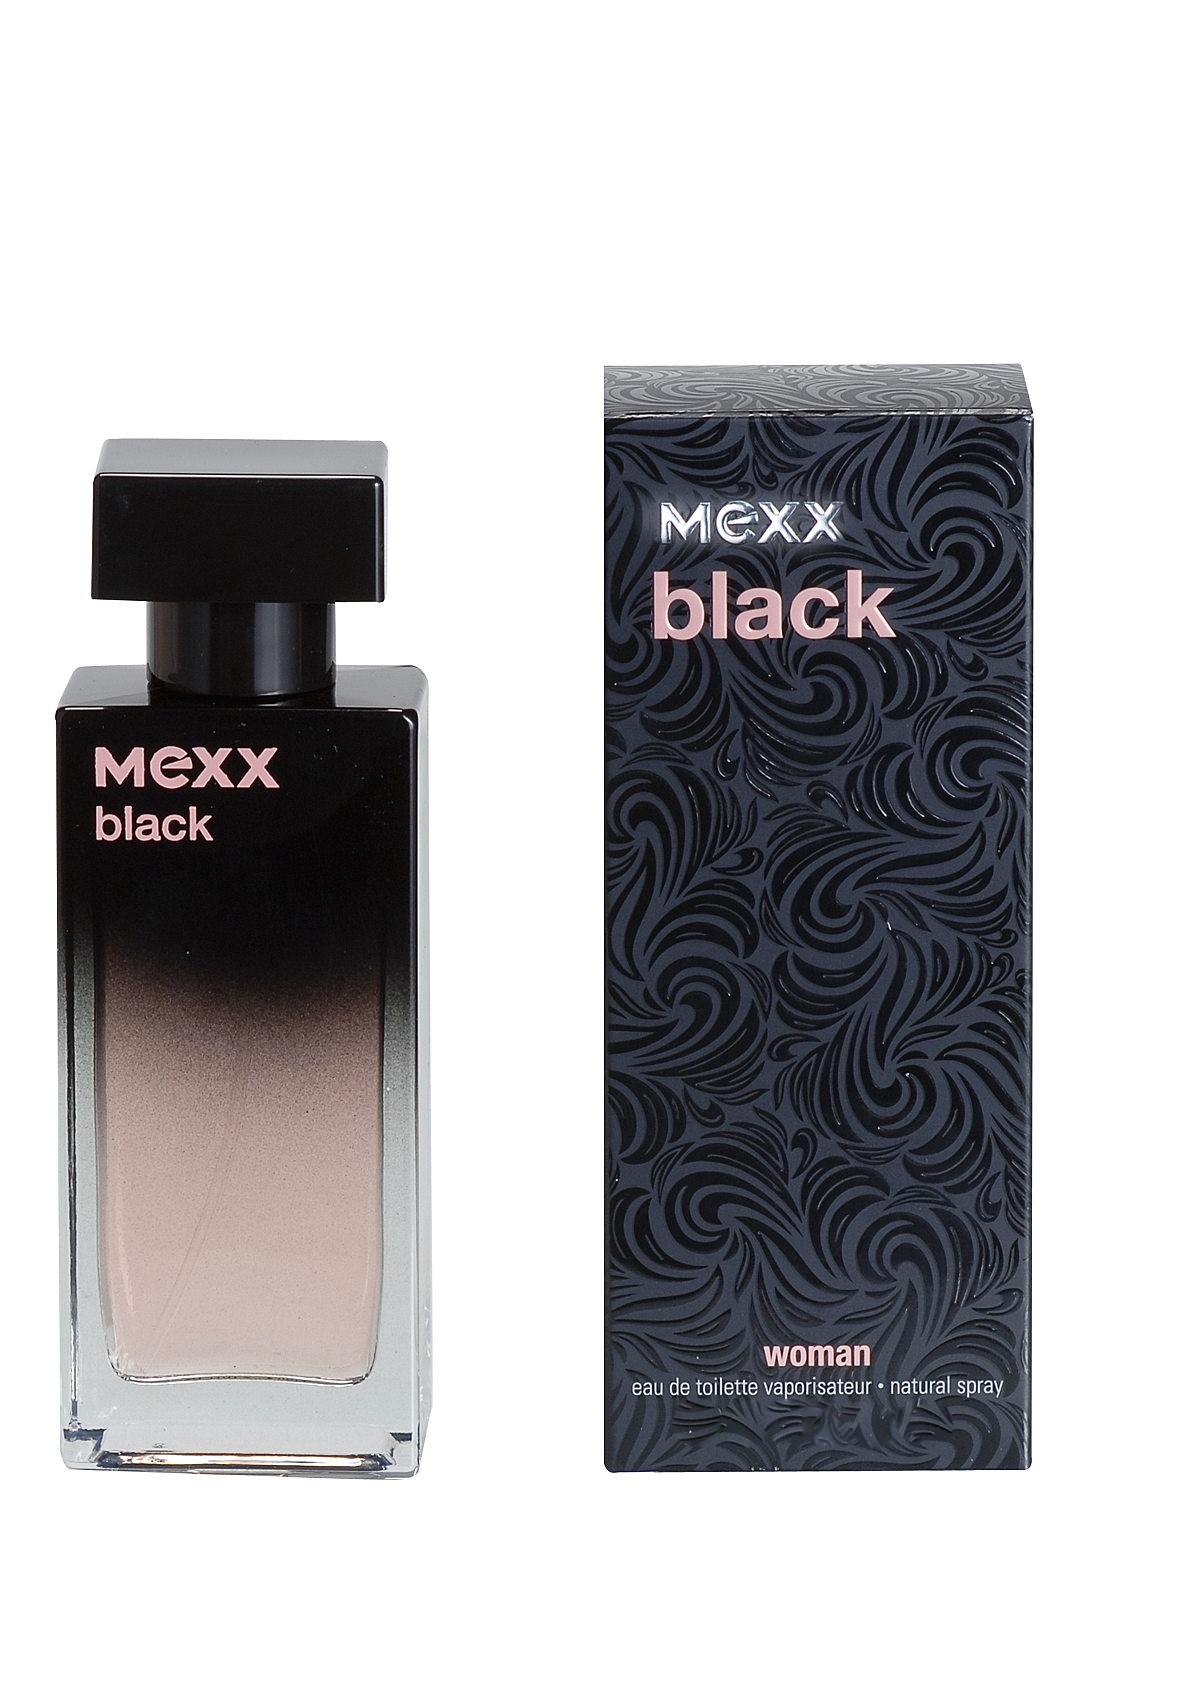 MEXX BLACK WOMAN